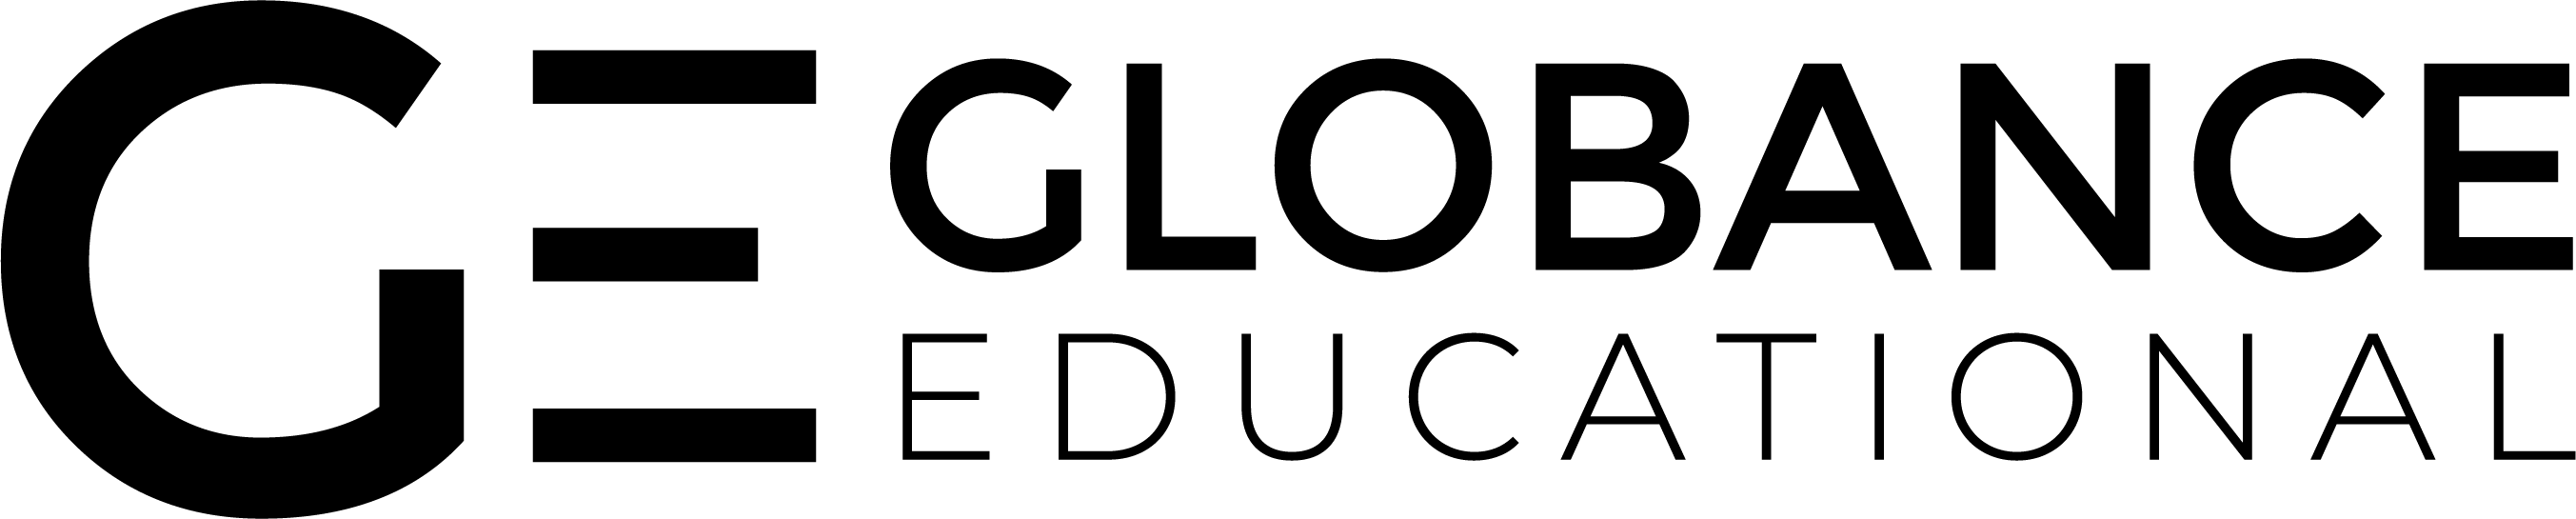 Logo GE orizzontale Black